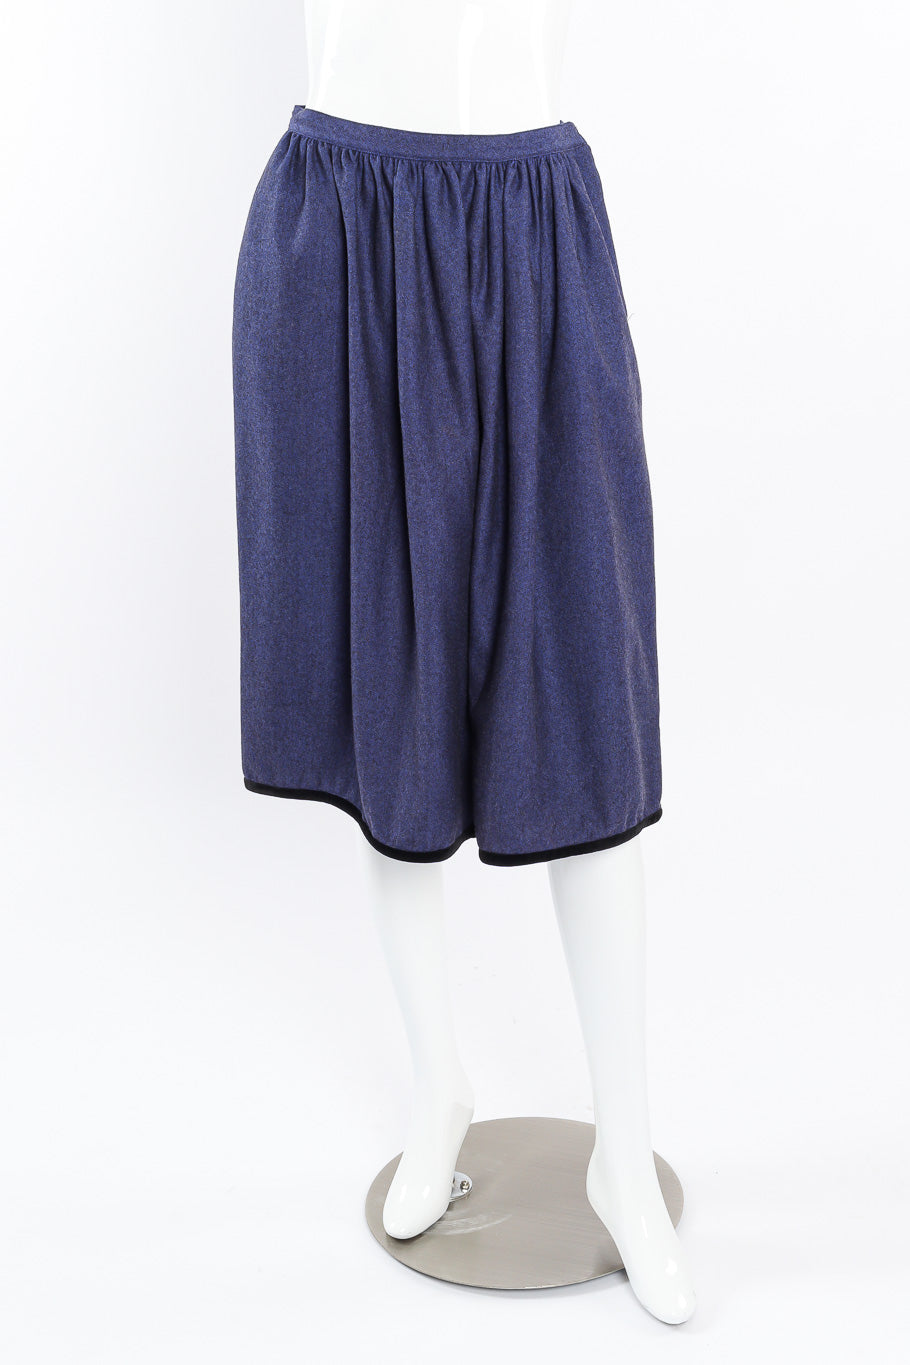 Valentino Boutique cotton denim top and skirt set on mannequin @recessla